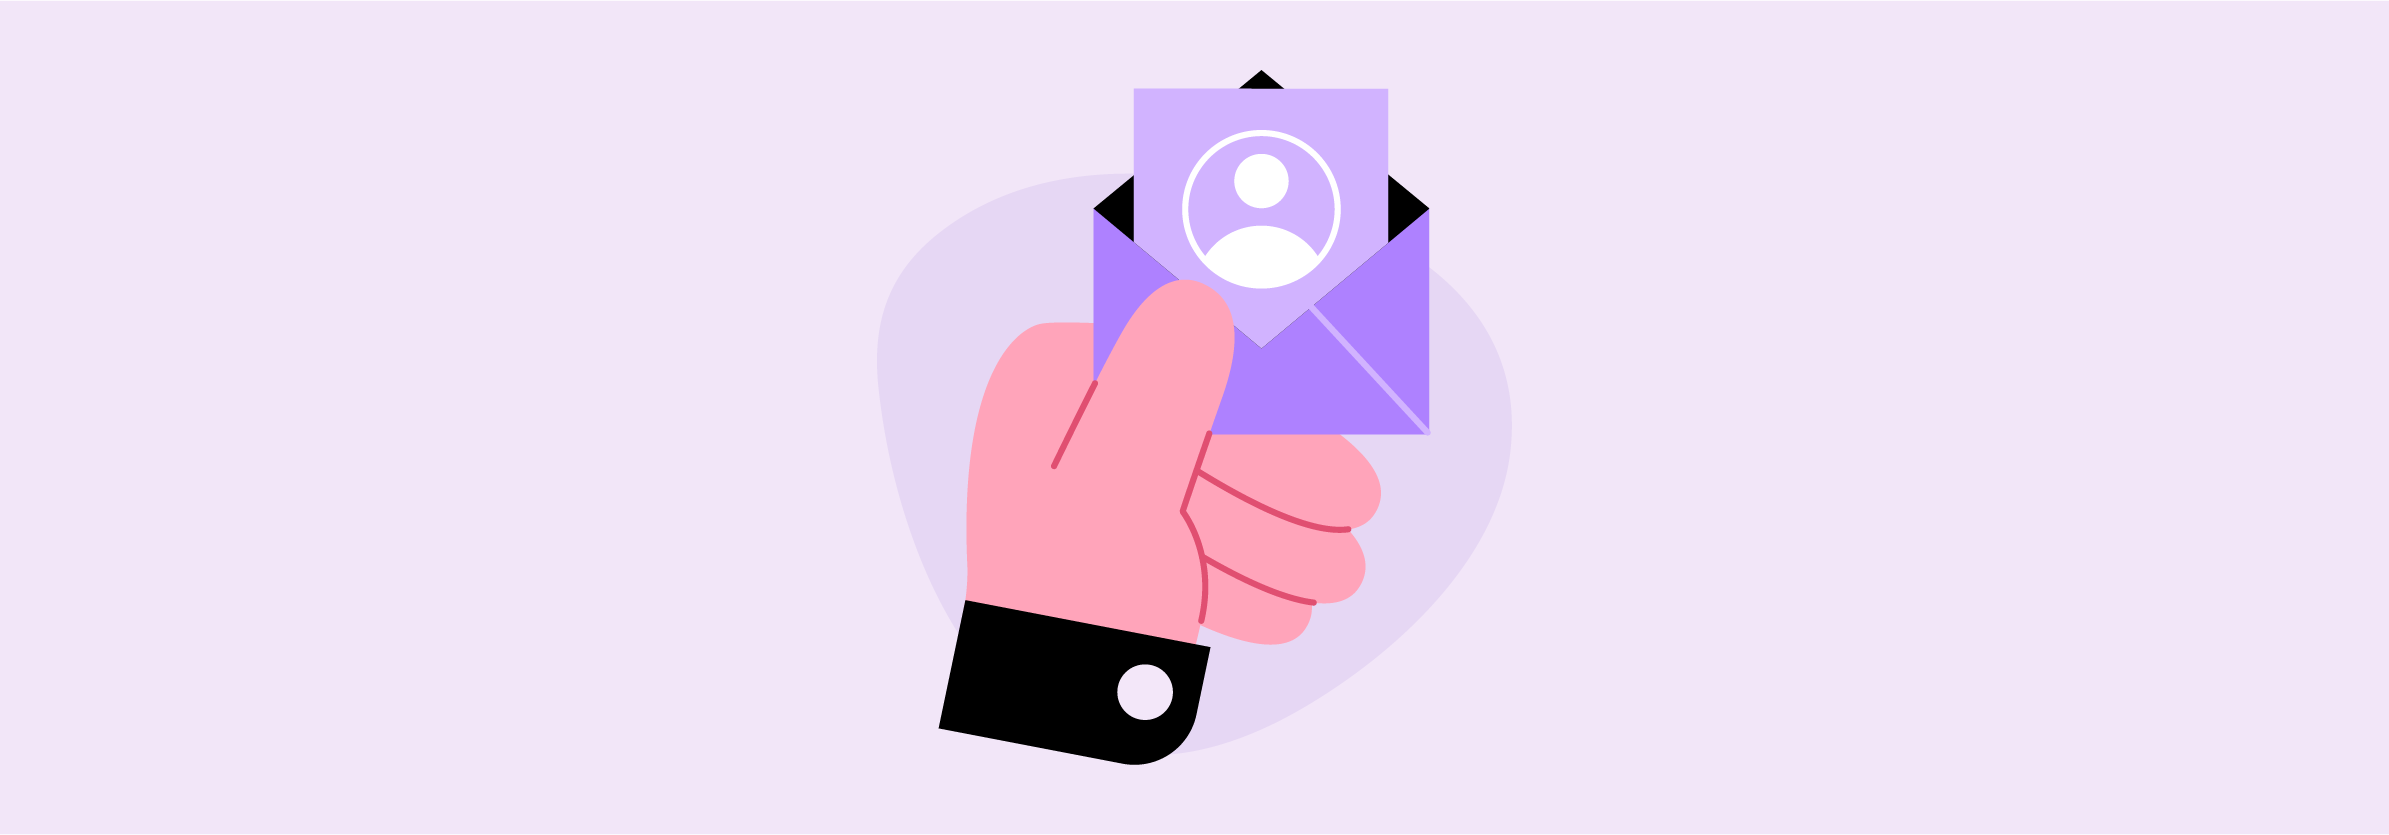 Tailored marketing mail designed through Magento customer segmentation